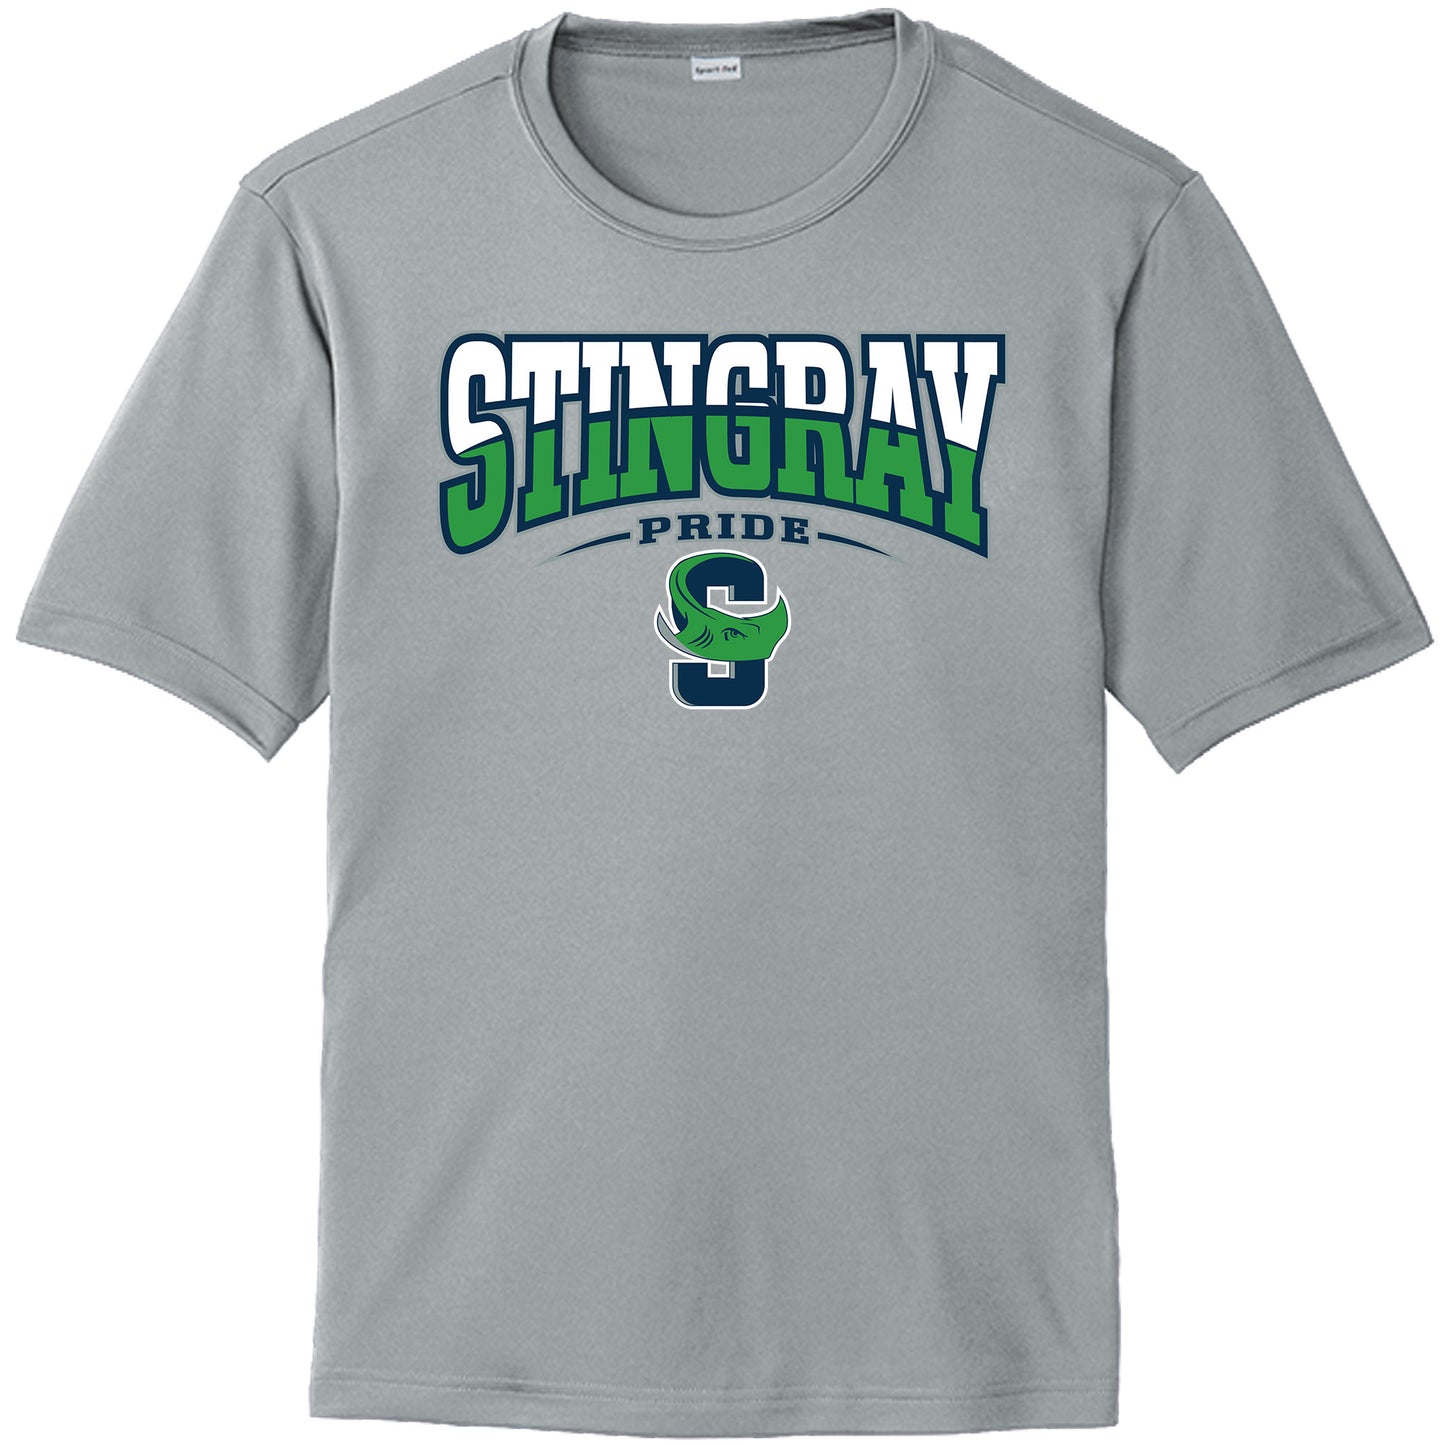 Sumner High School Drifit Shirt "Stingrays Pride"